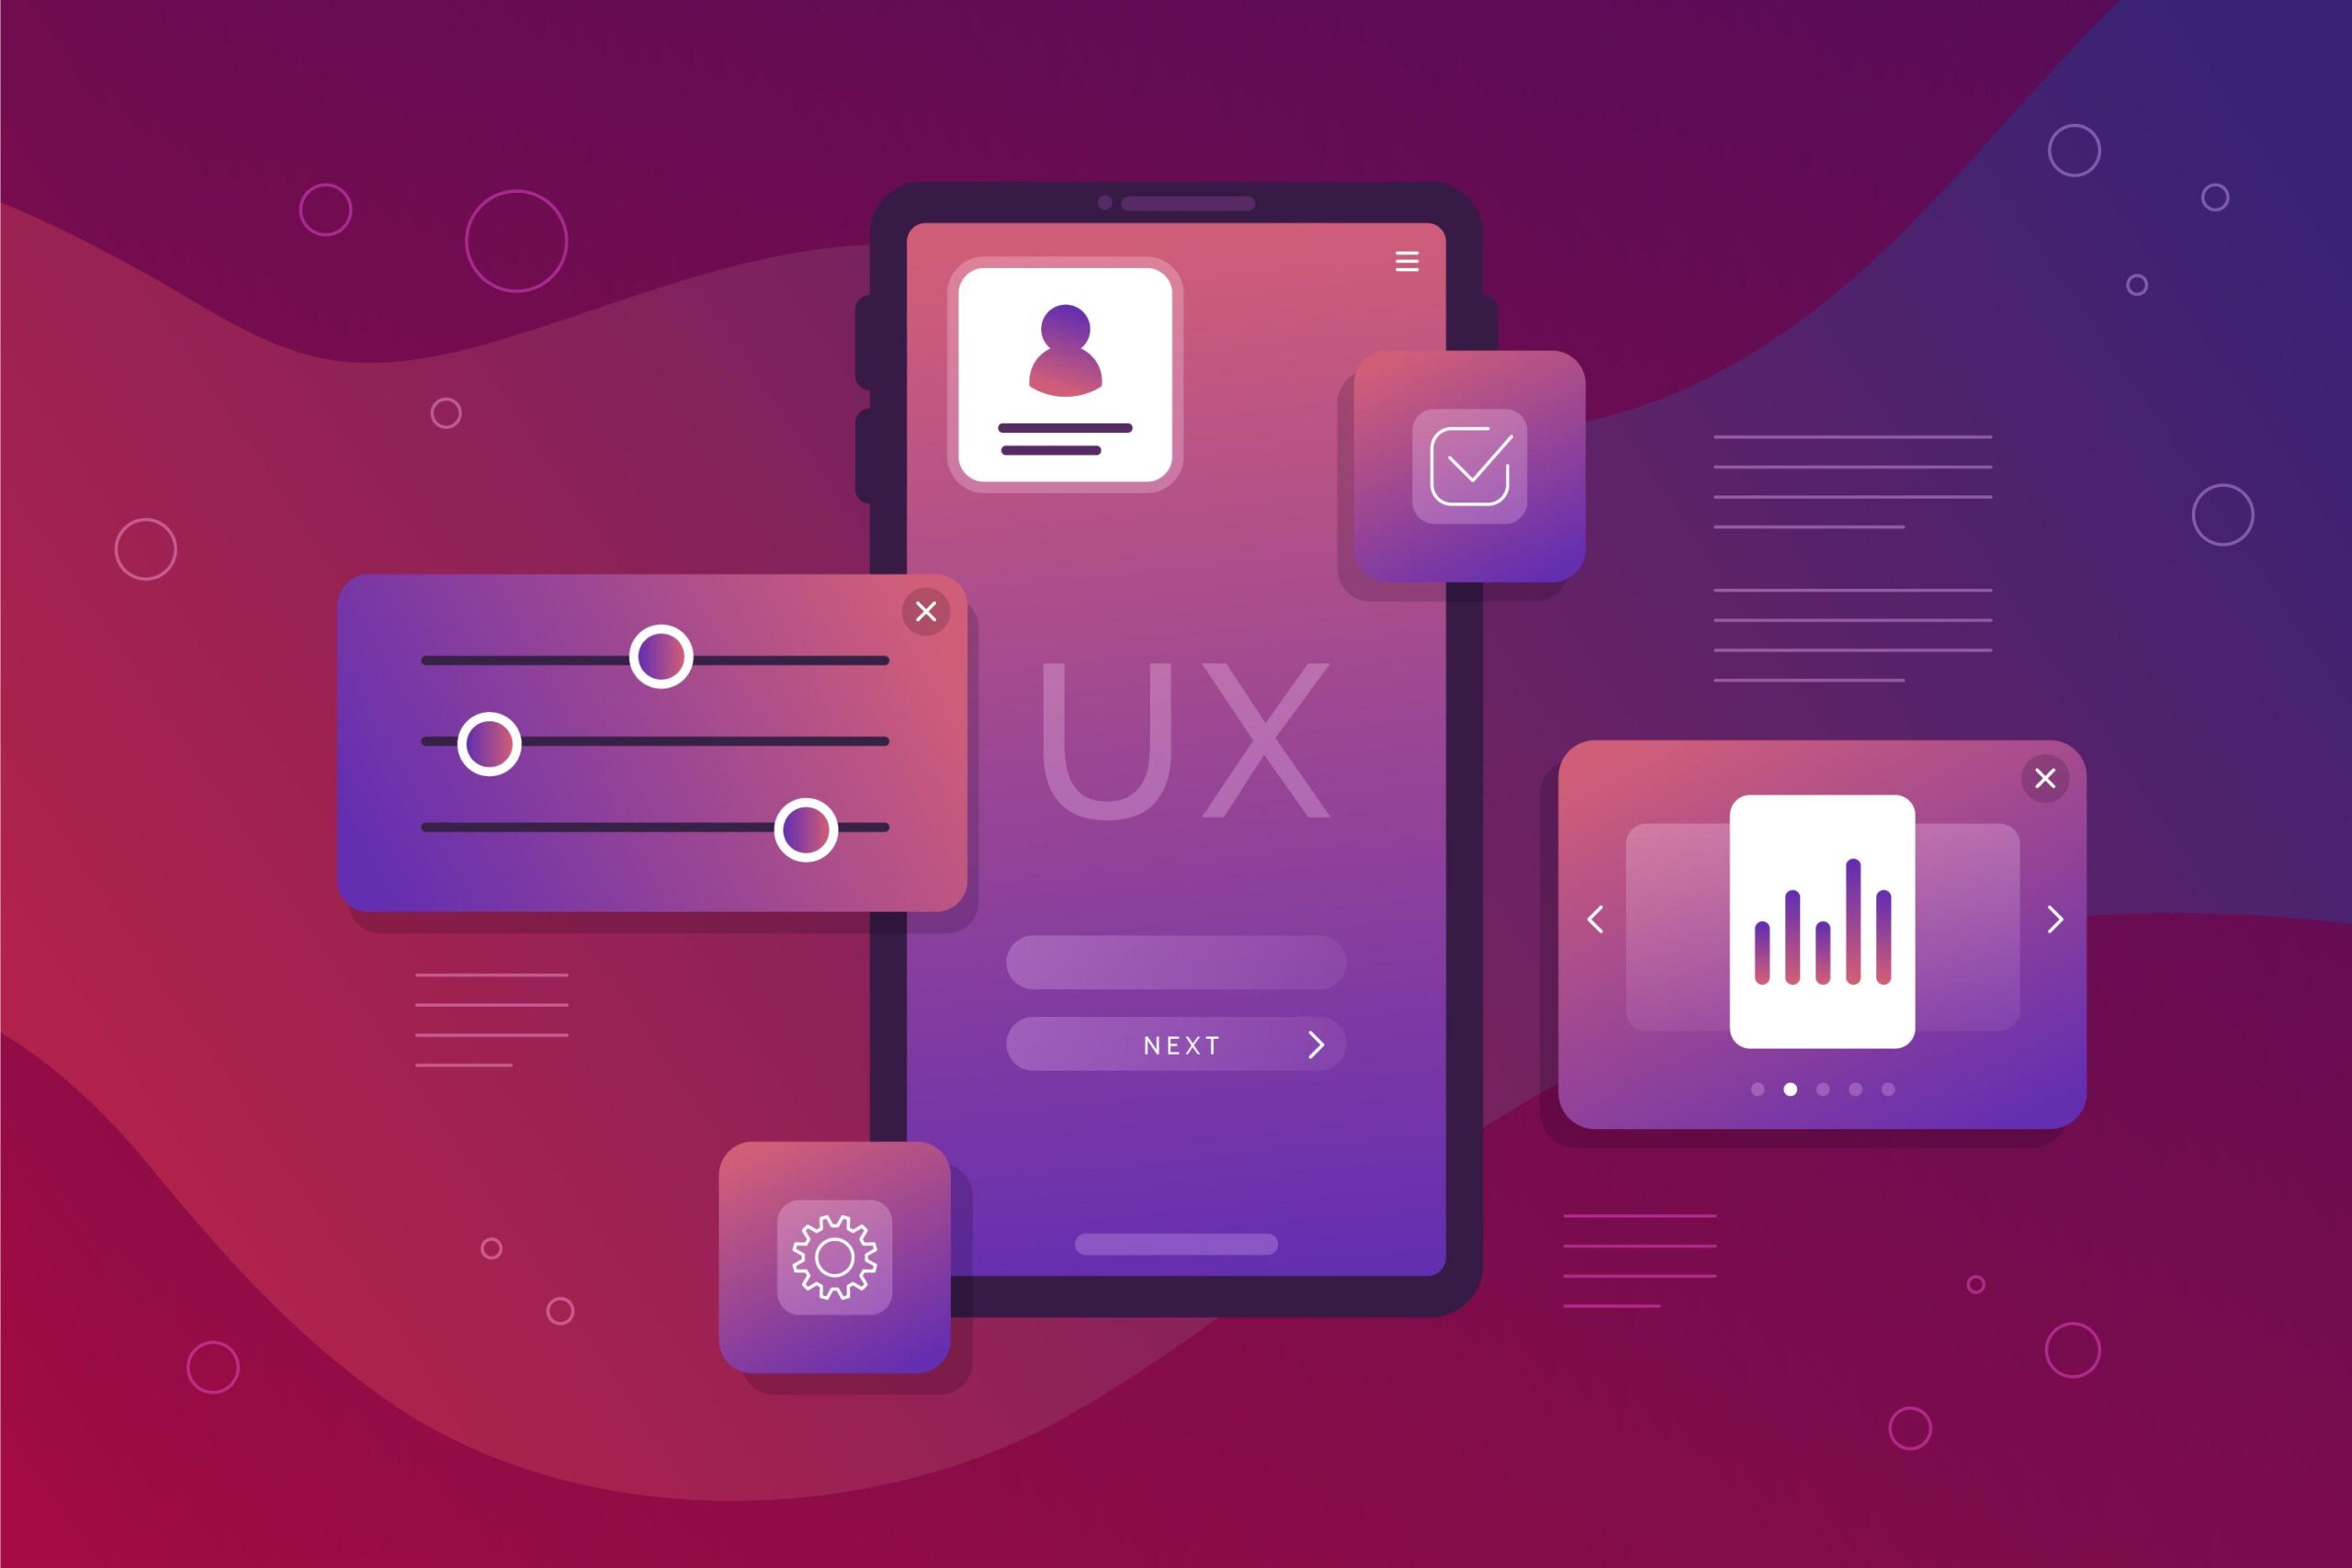 User Experience Design